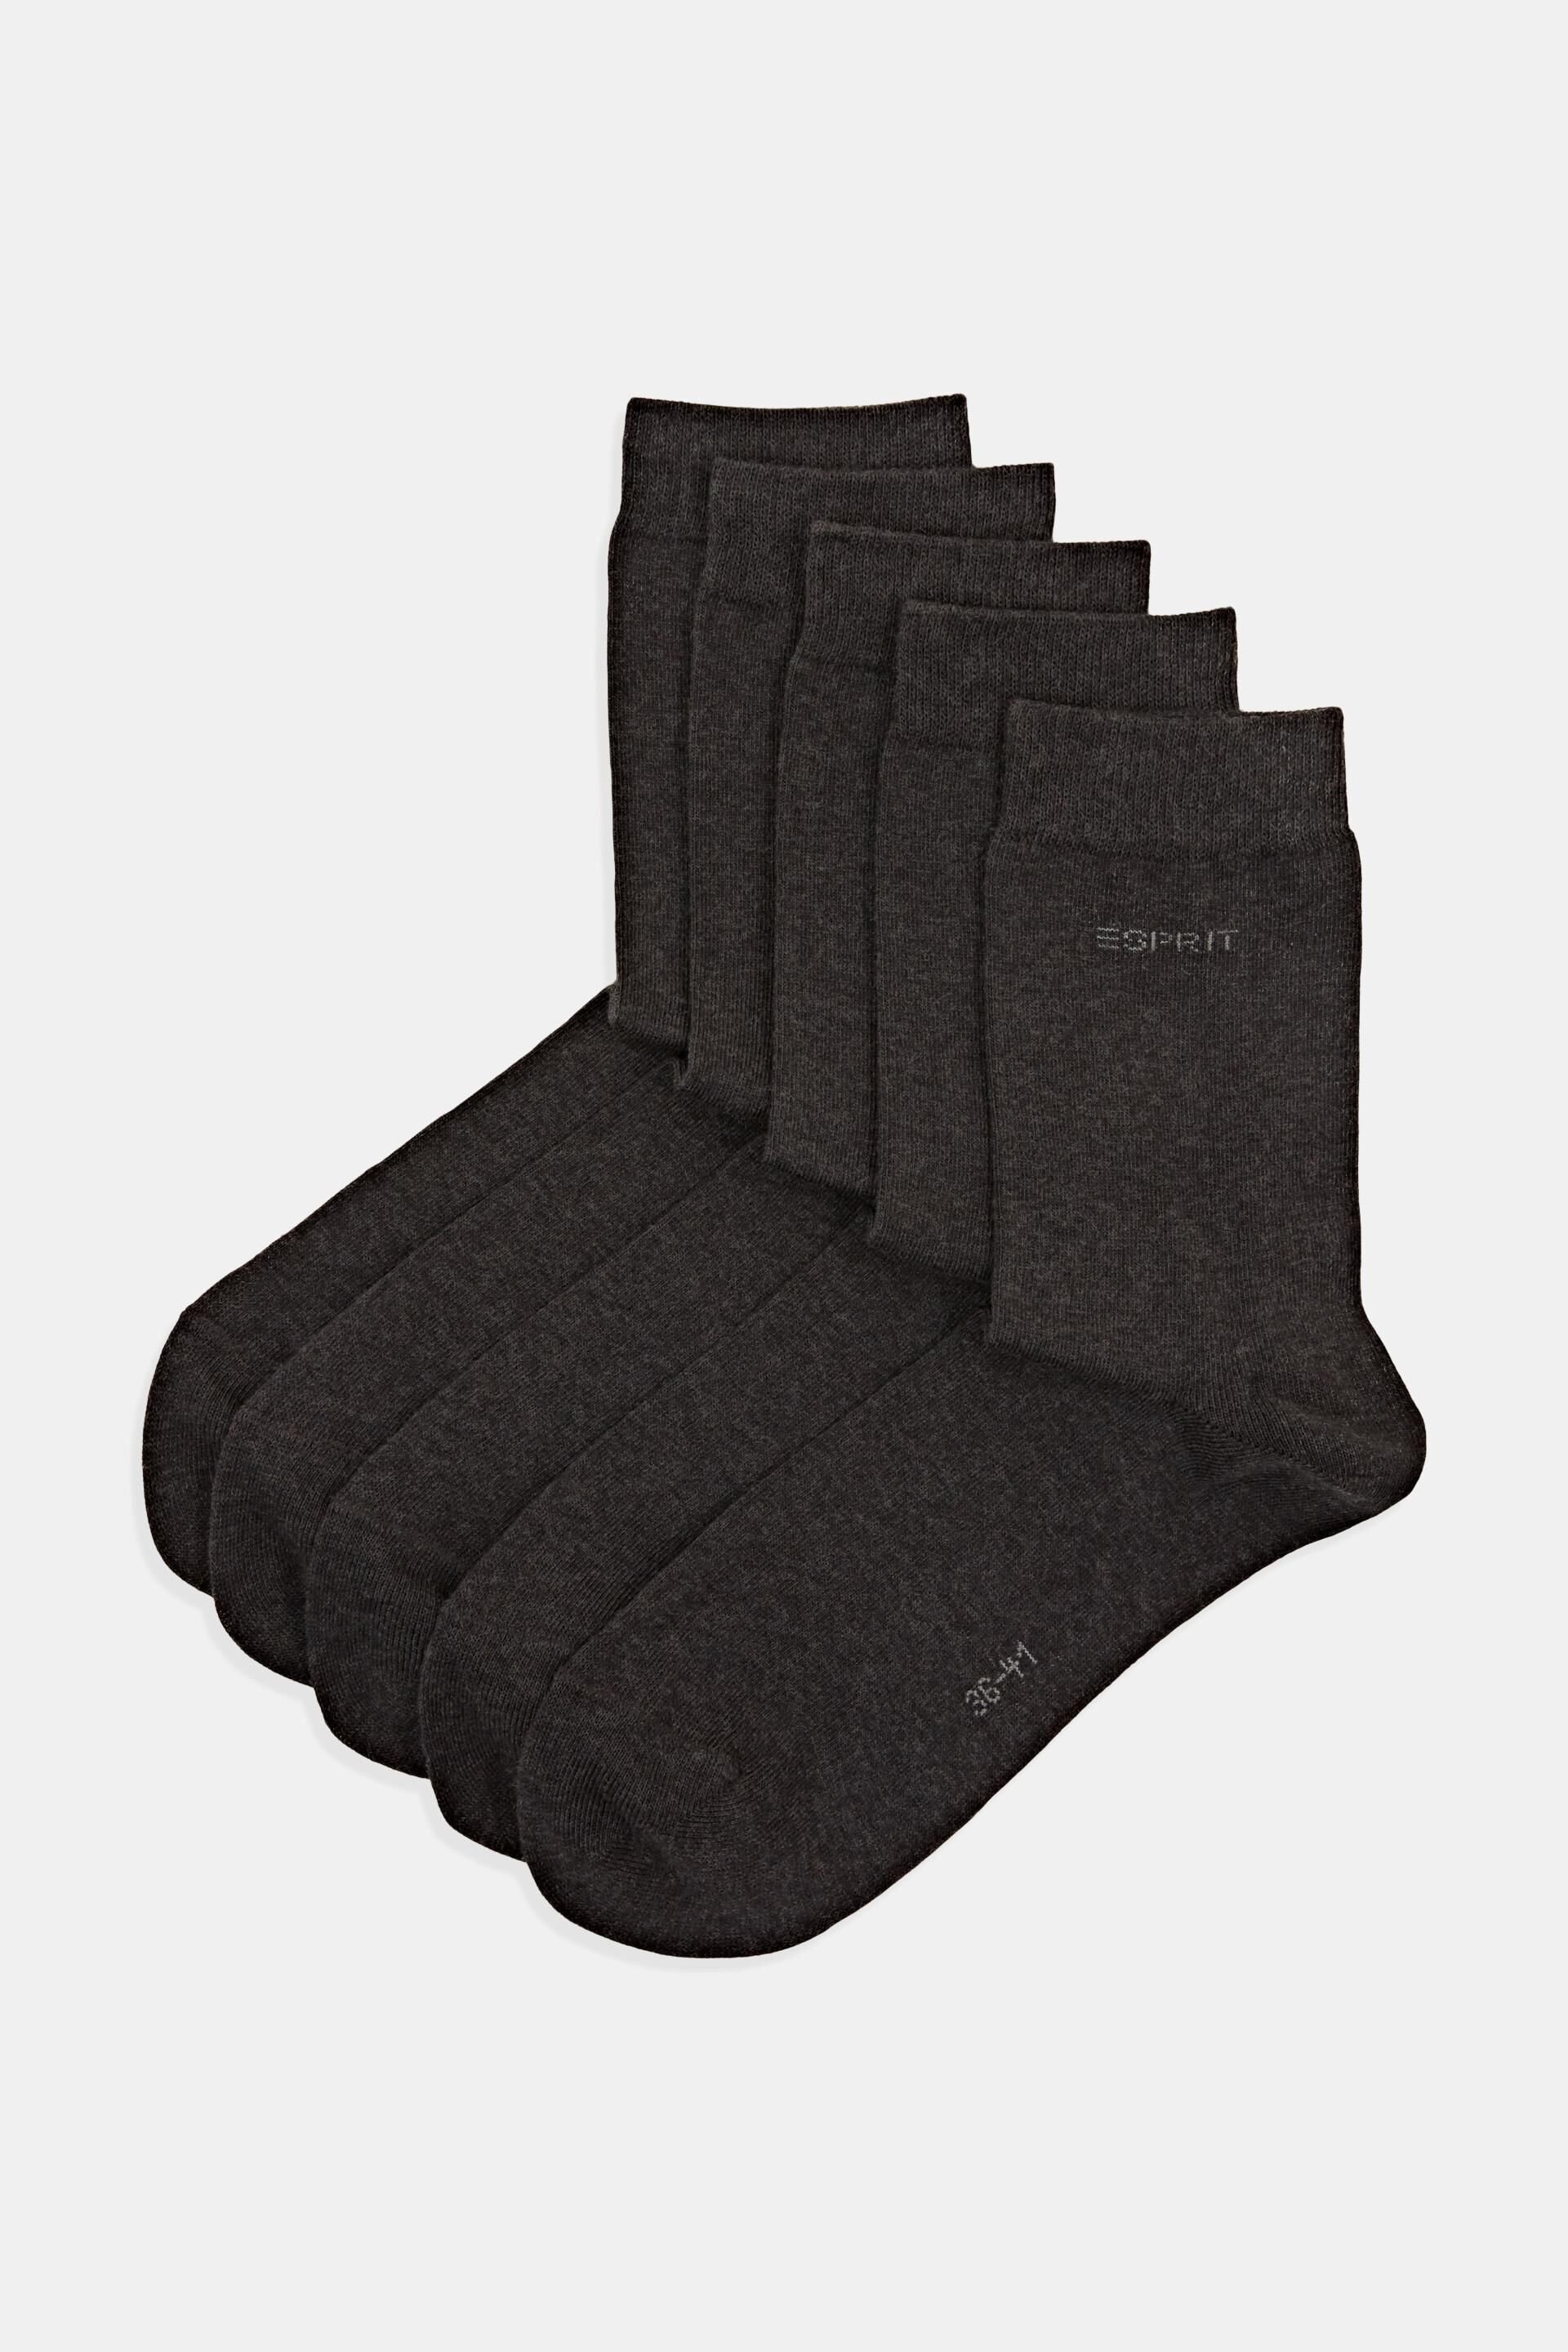 Esprit organic socks, of 5 cotton plain Pack